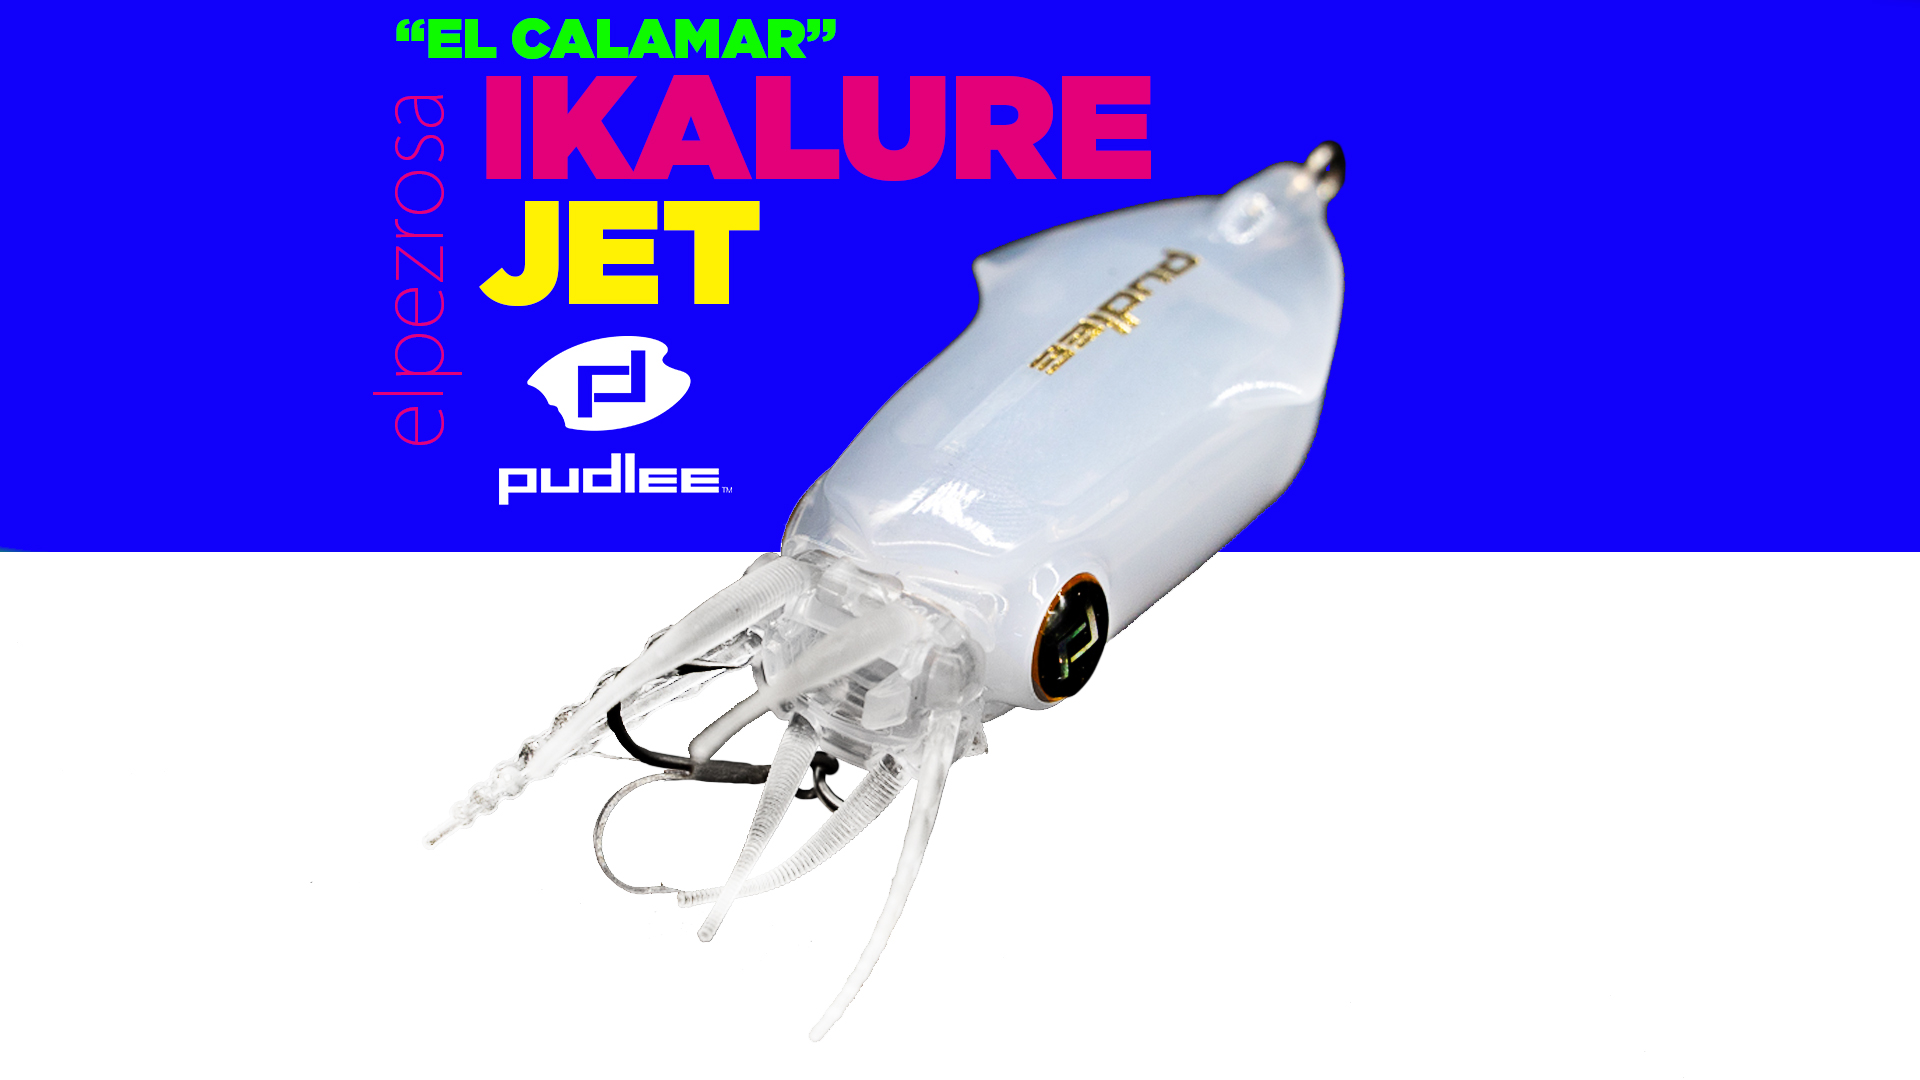 Ika lure Jet de Pudlee: El calamar para pesca ligera venido desde Japón